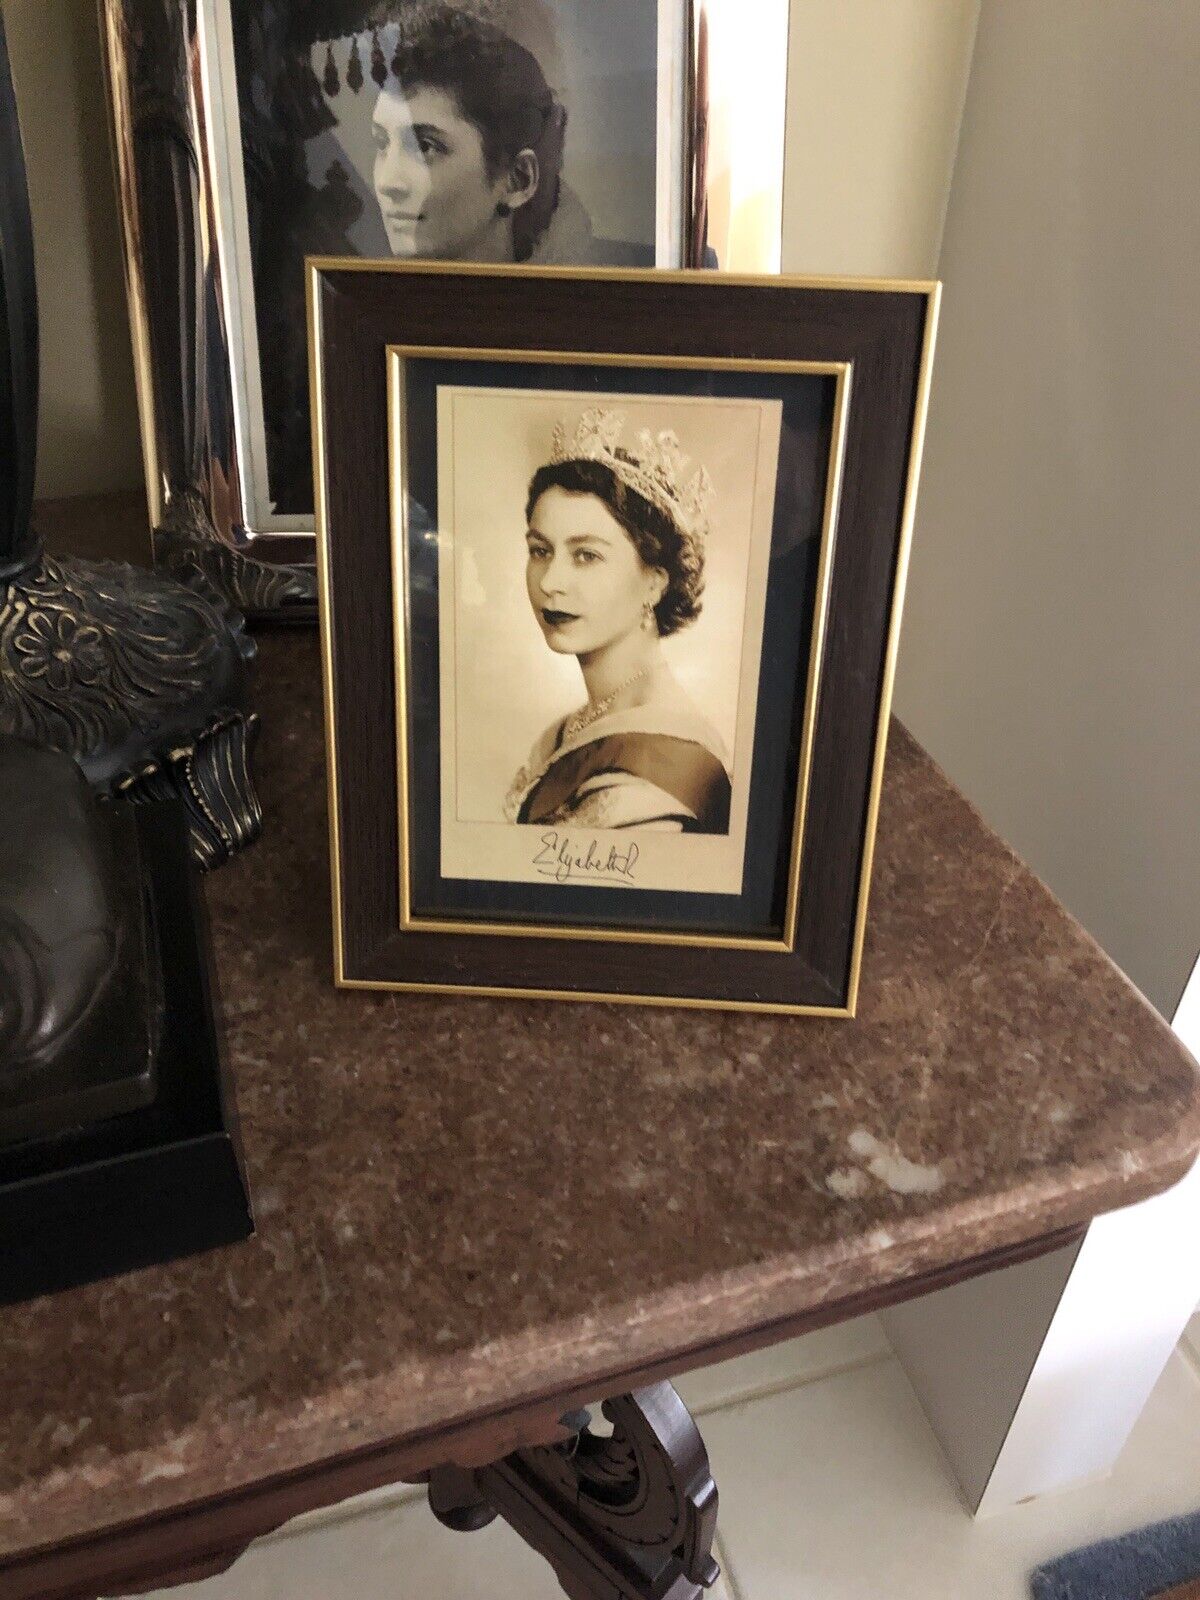 Queen Elizabeth II - Sepia Portrait in Frame